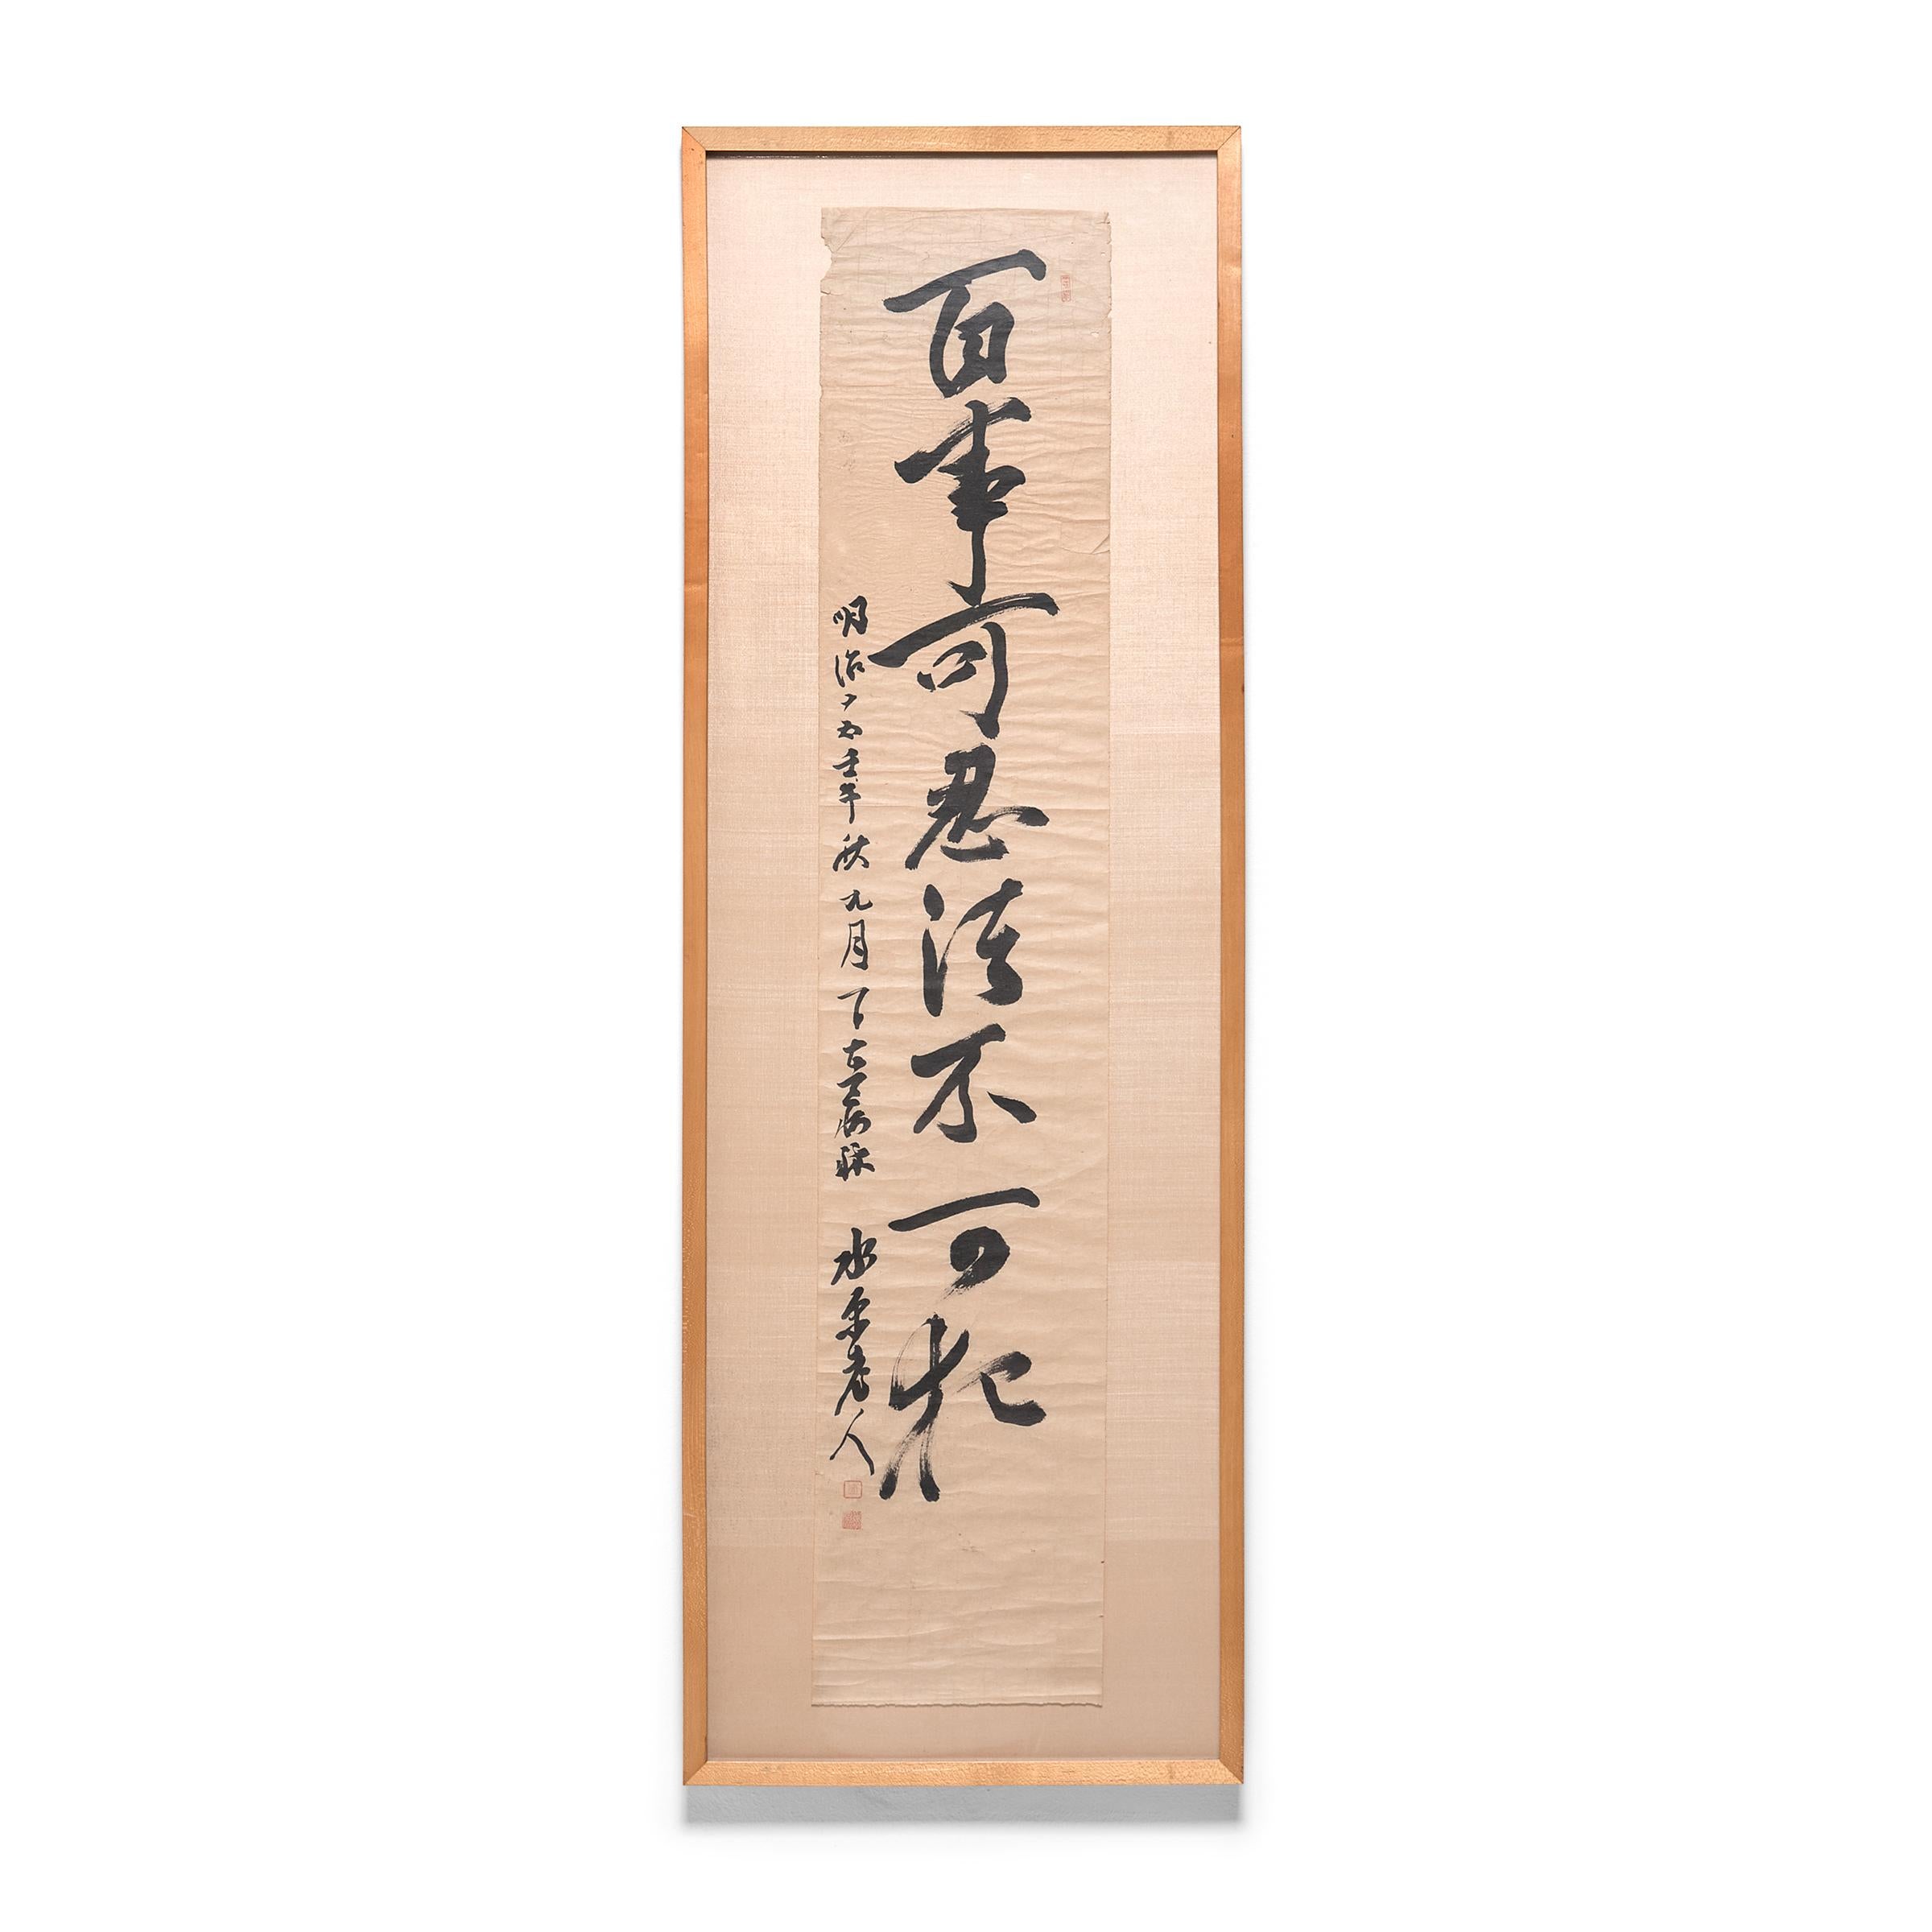 Scroll de calligraphie chinoise, vers 1920 - Art de Unknown